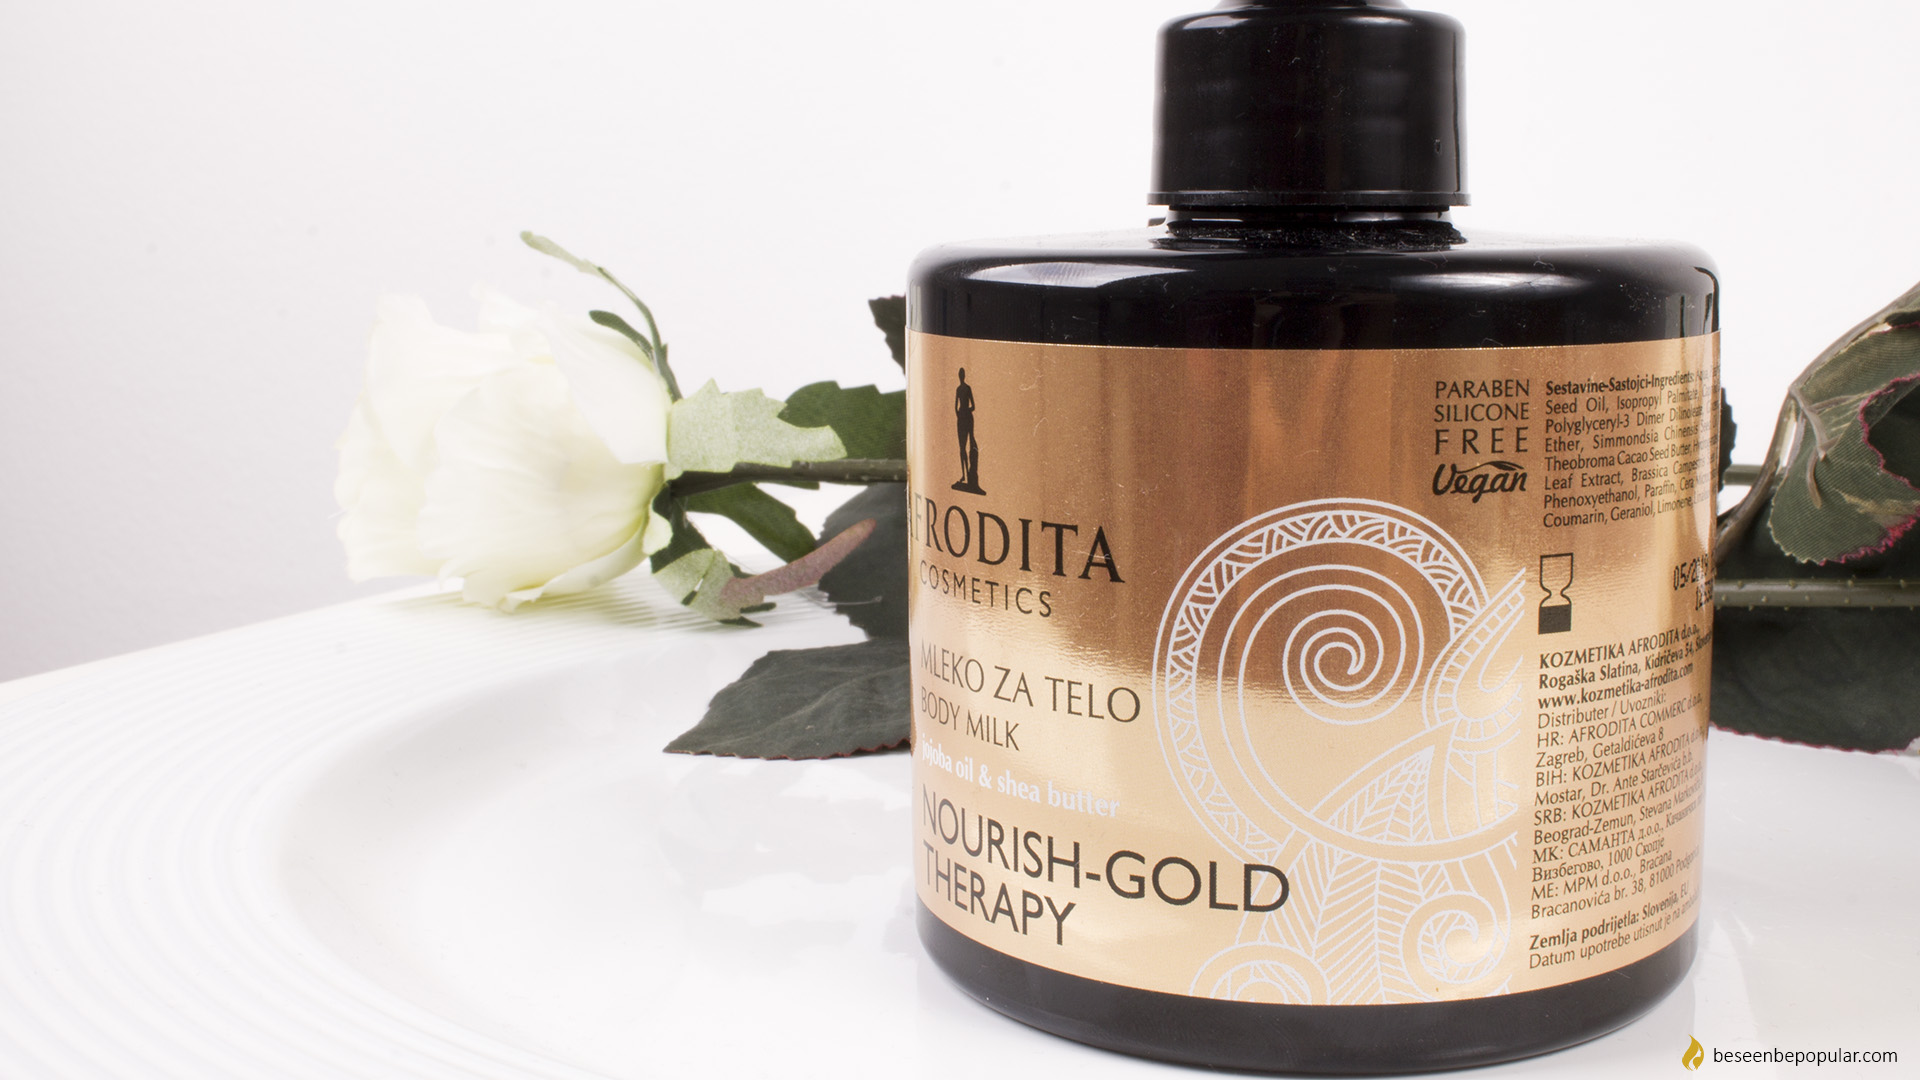 Dry skin care - Afrodita Nourish Gold Therapy body milk